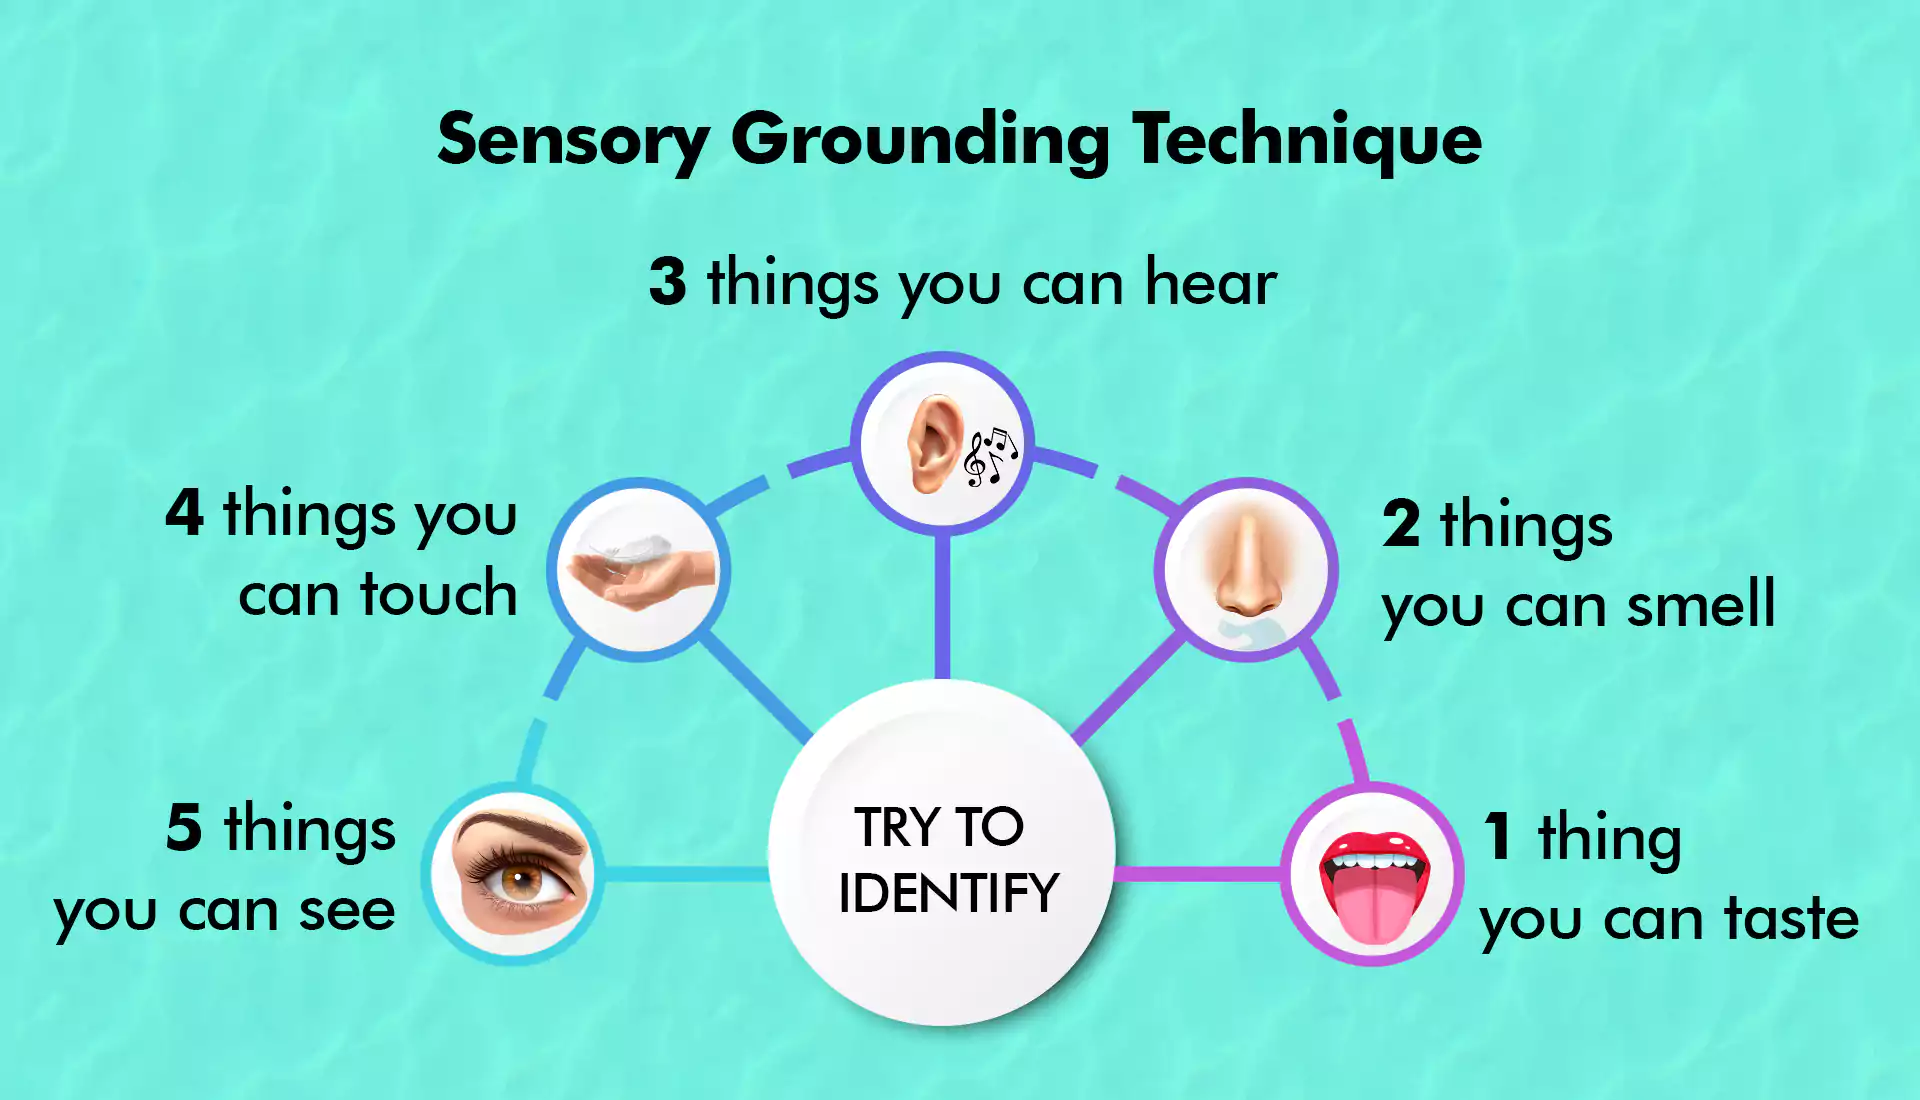 Sensory grounding technique